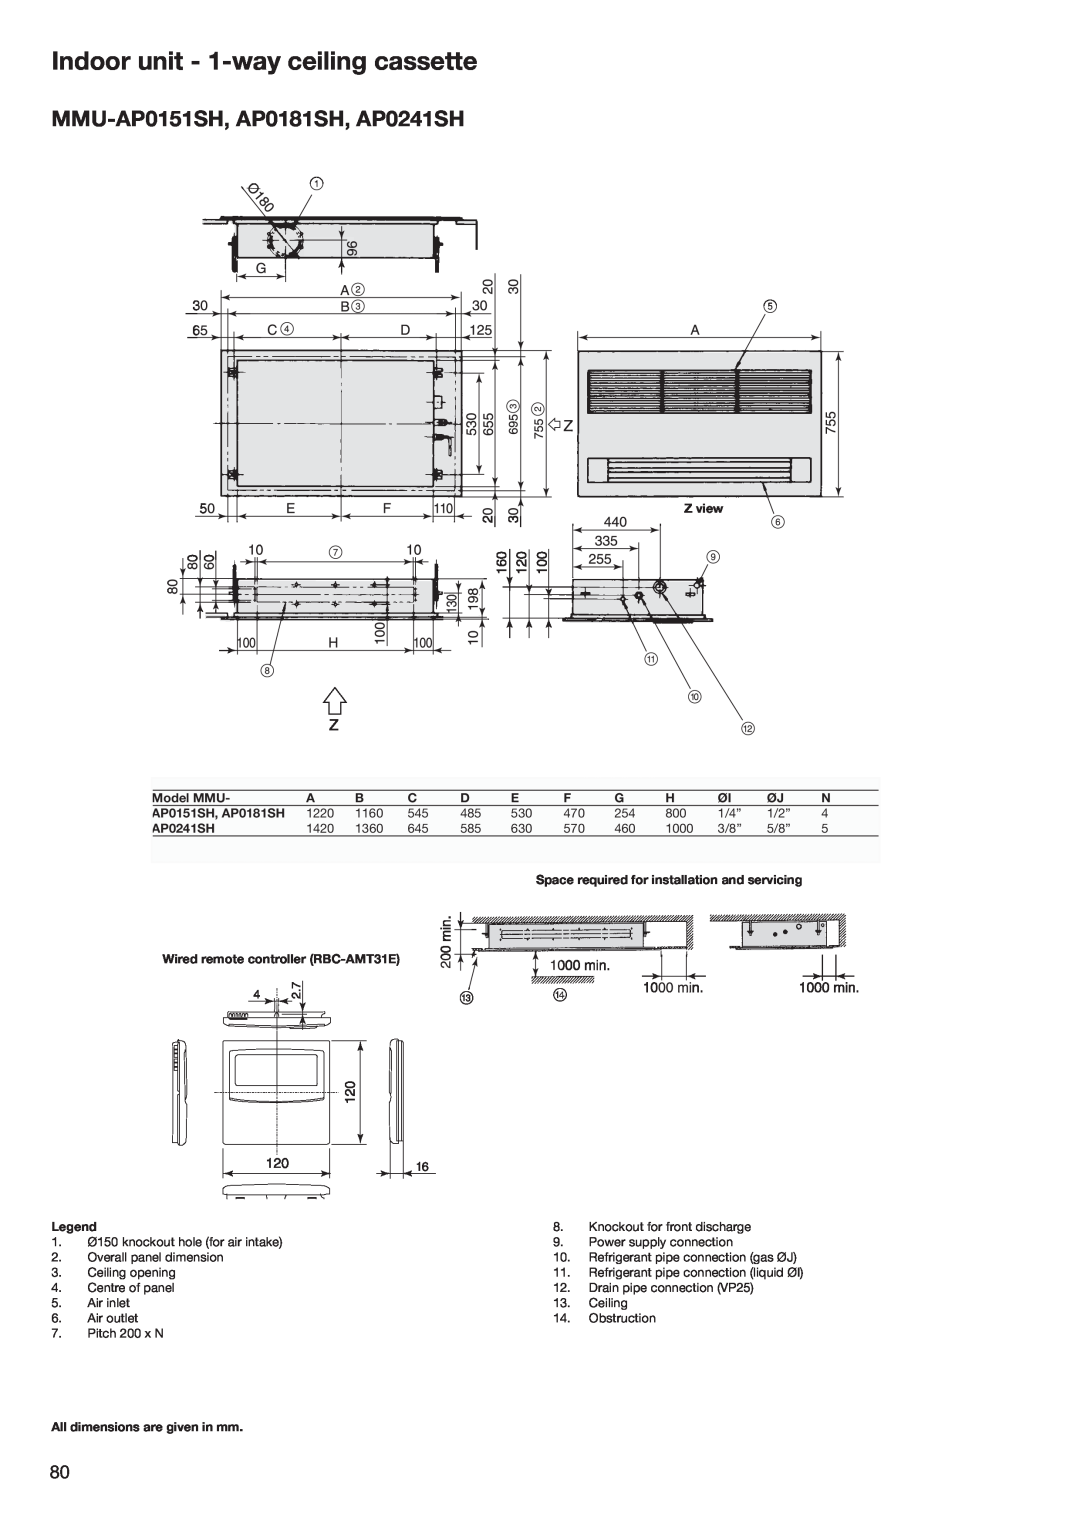 Toshiba HFC R-410A manual MMU-AP0151SH,AP0181SH, AP0241SH, Indoor unit - 1-wayceiling cassette 